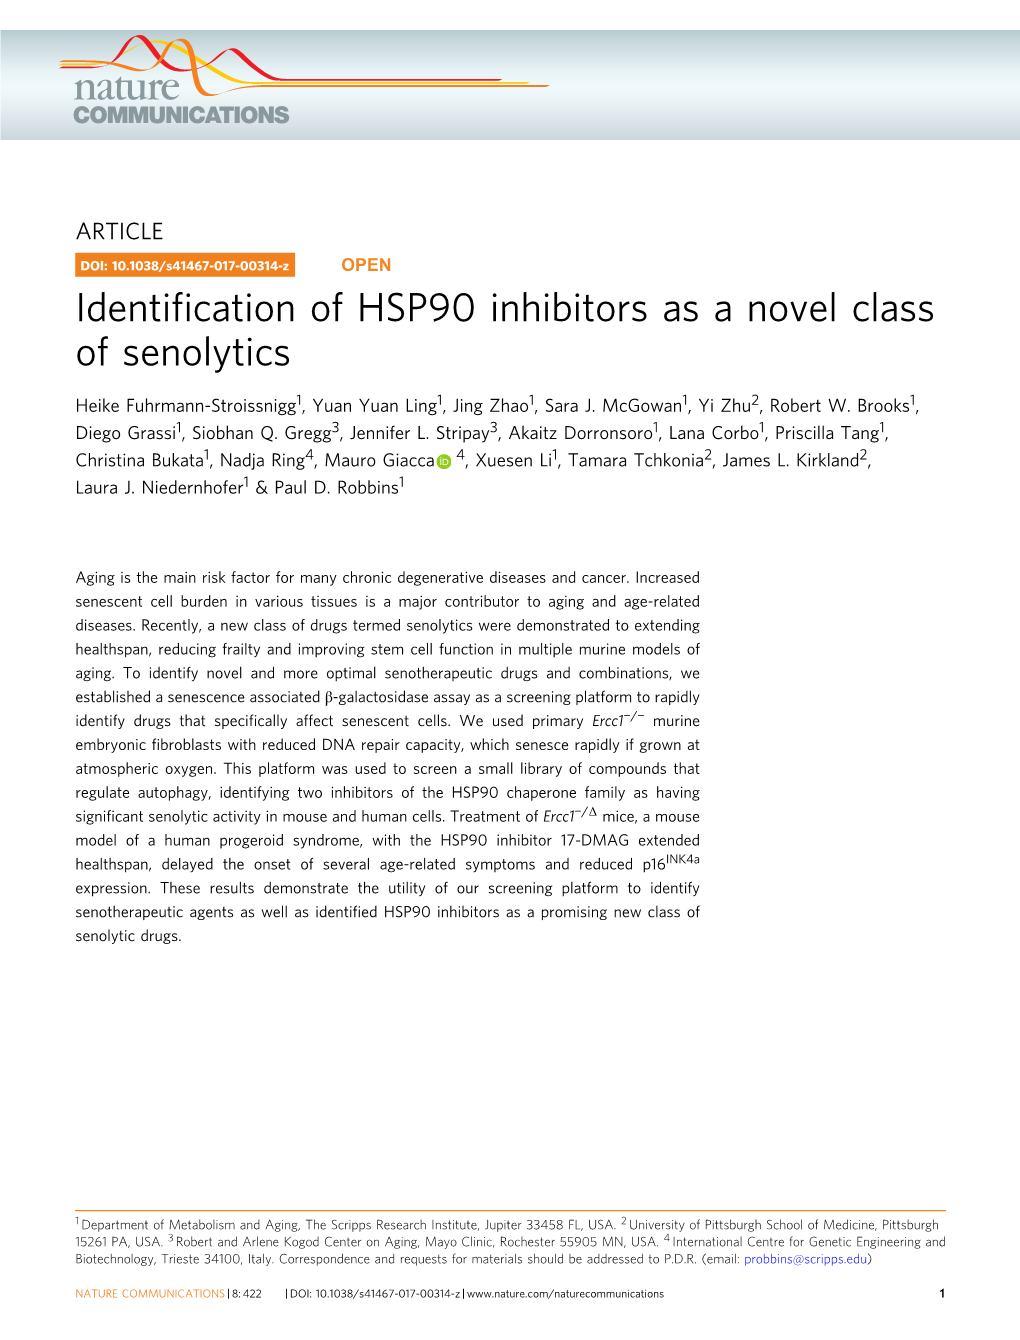 Identification of HSP90 Inhibitors As a Novel Class of Senolytics